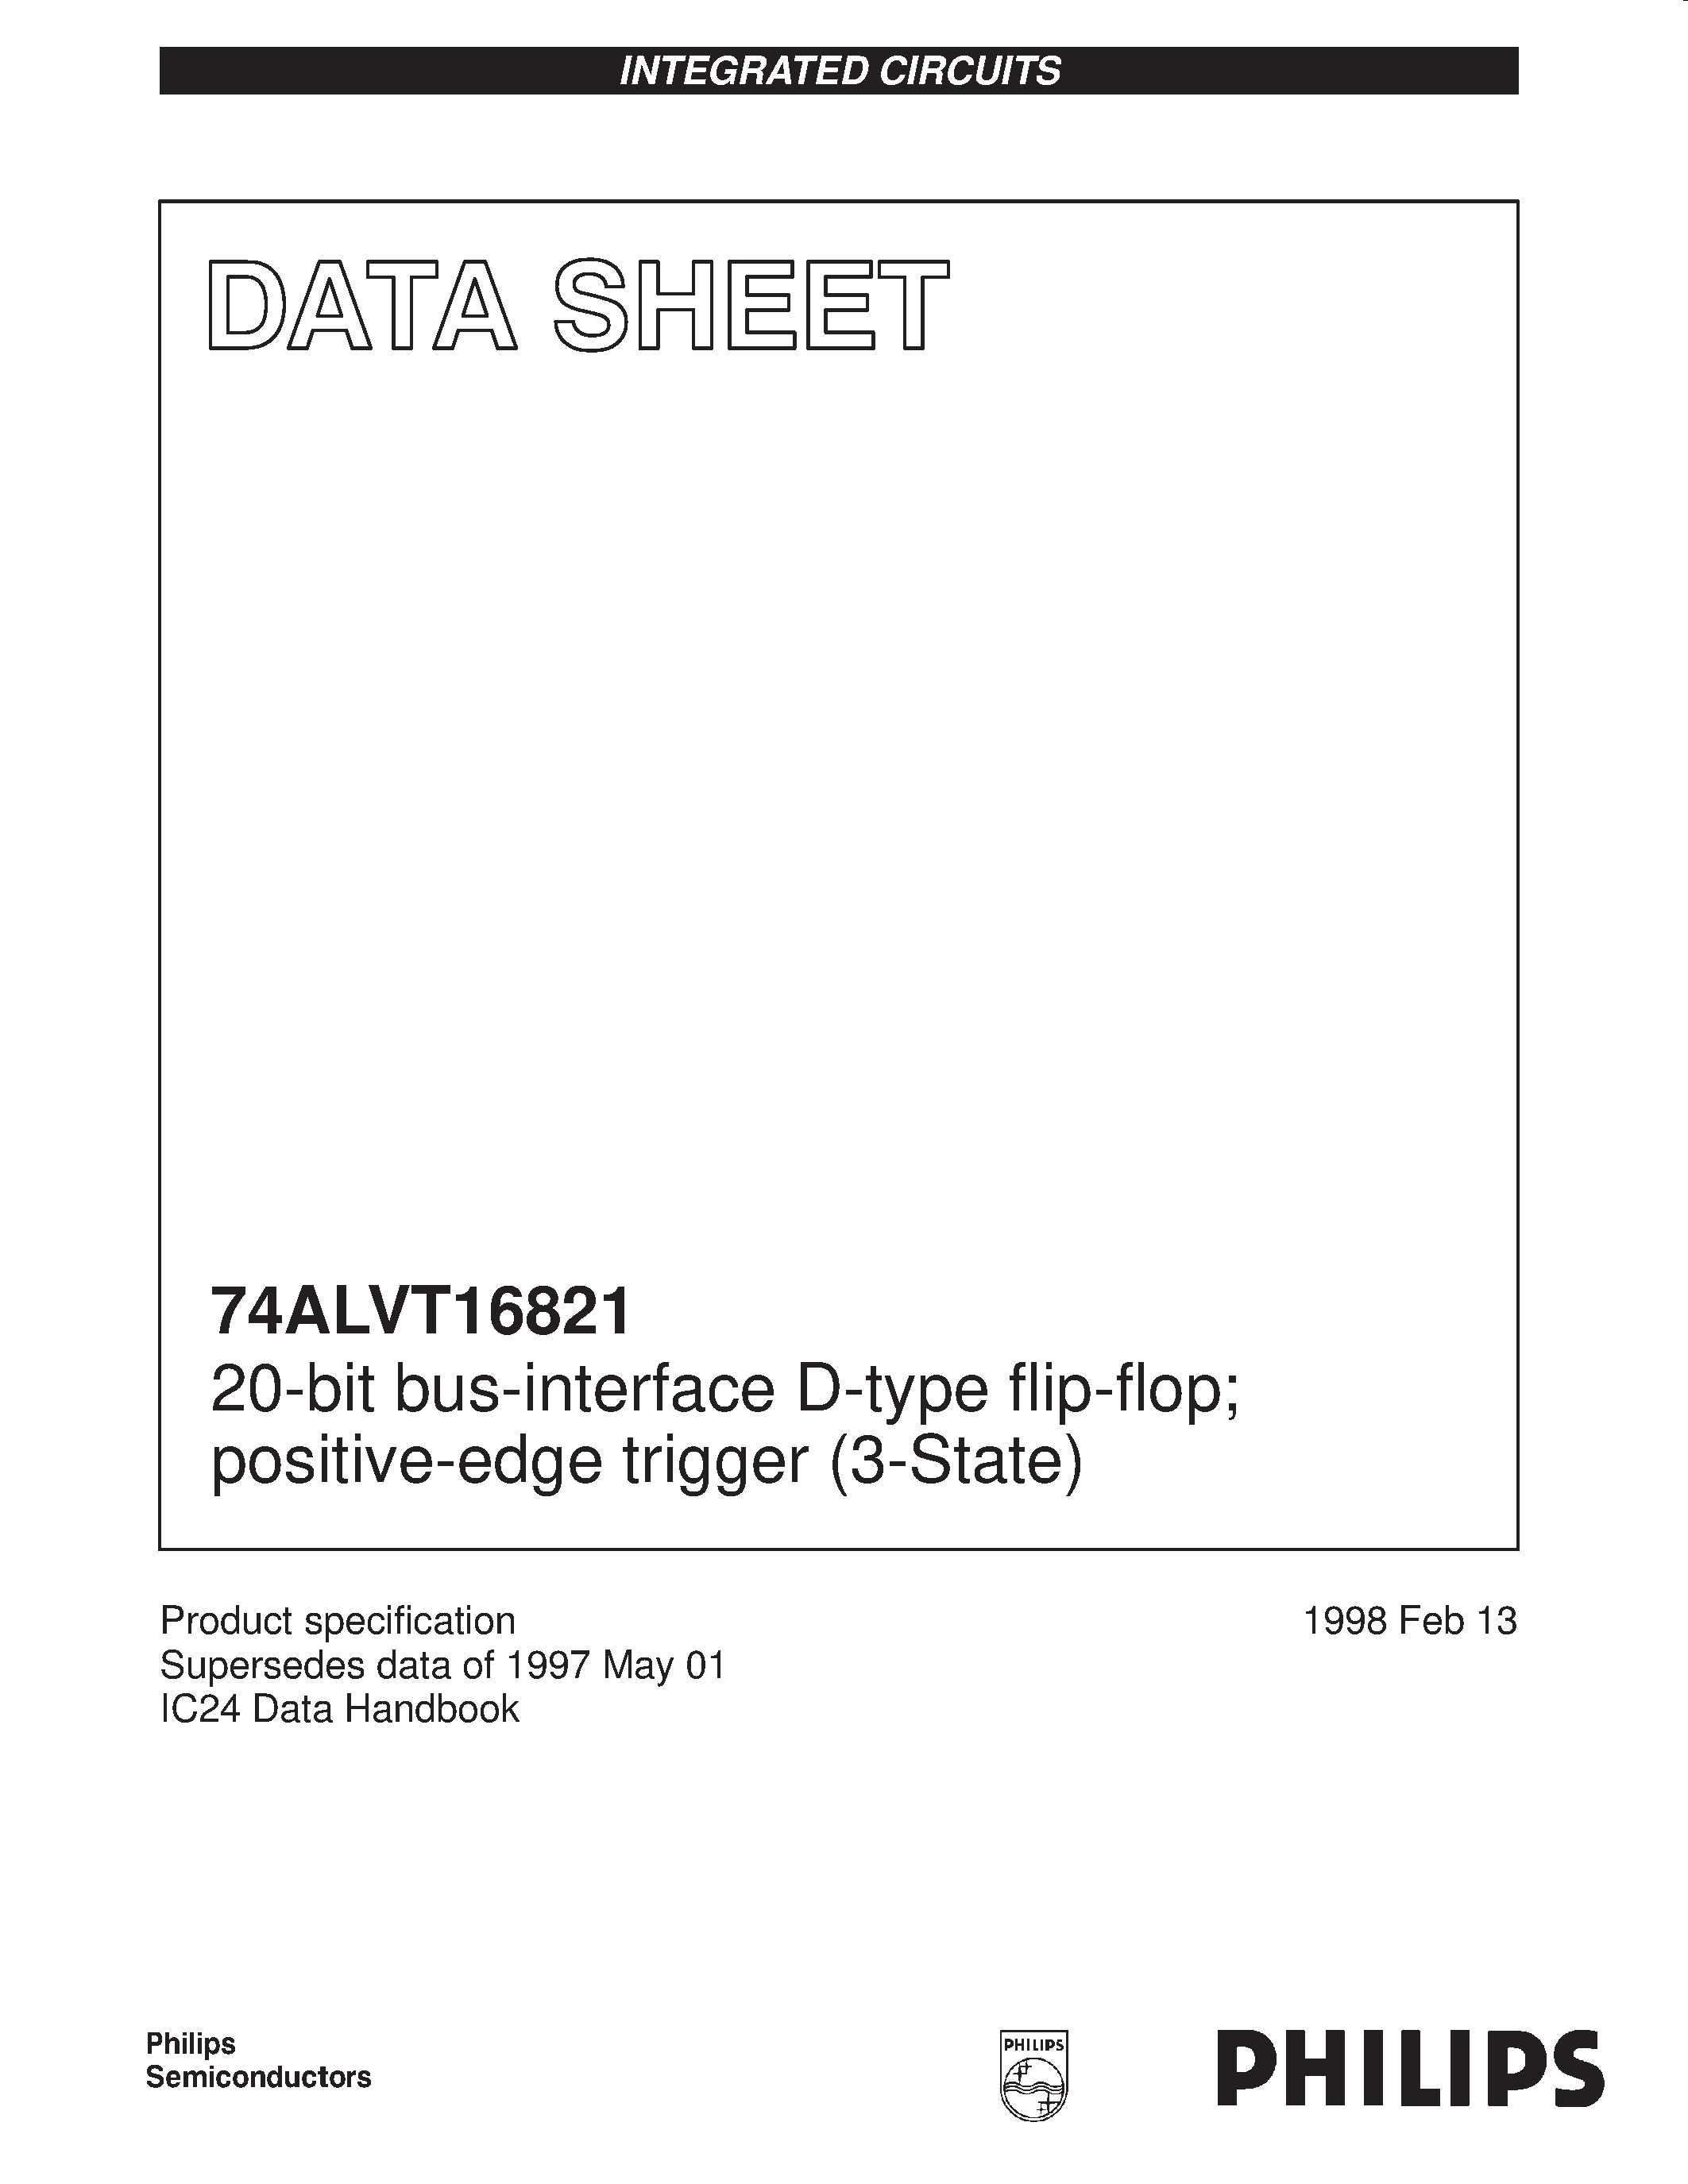 Datasheet 74ALVT16821DGG - 20-bit bus-interface D-type flip-flop; positive-edge trigger 3-State page 1